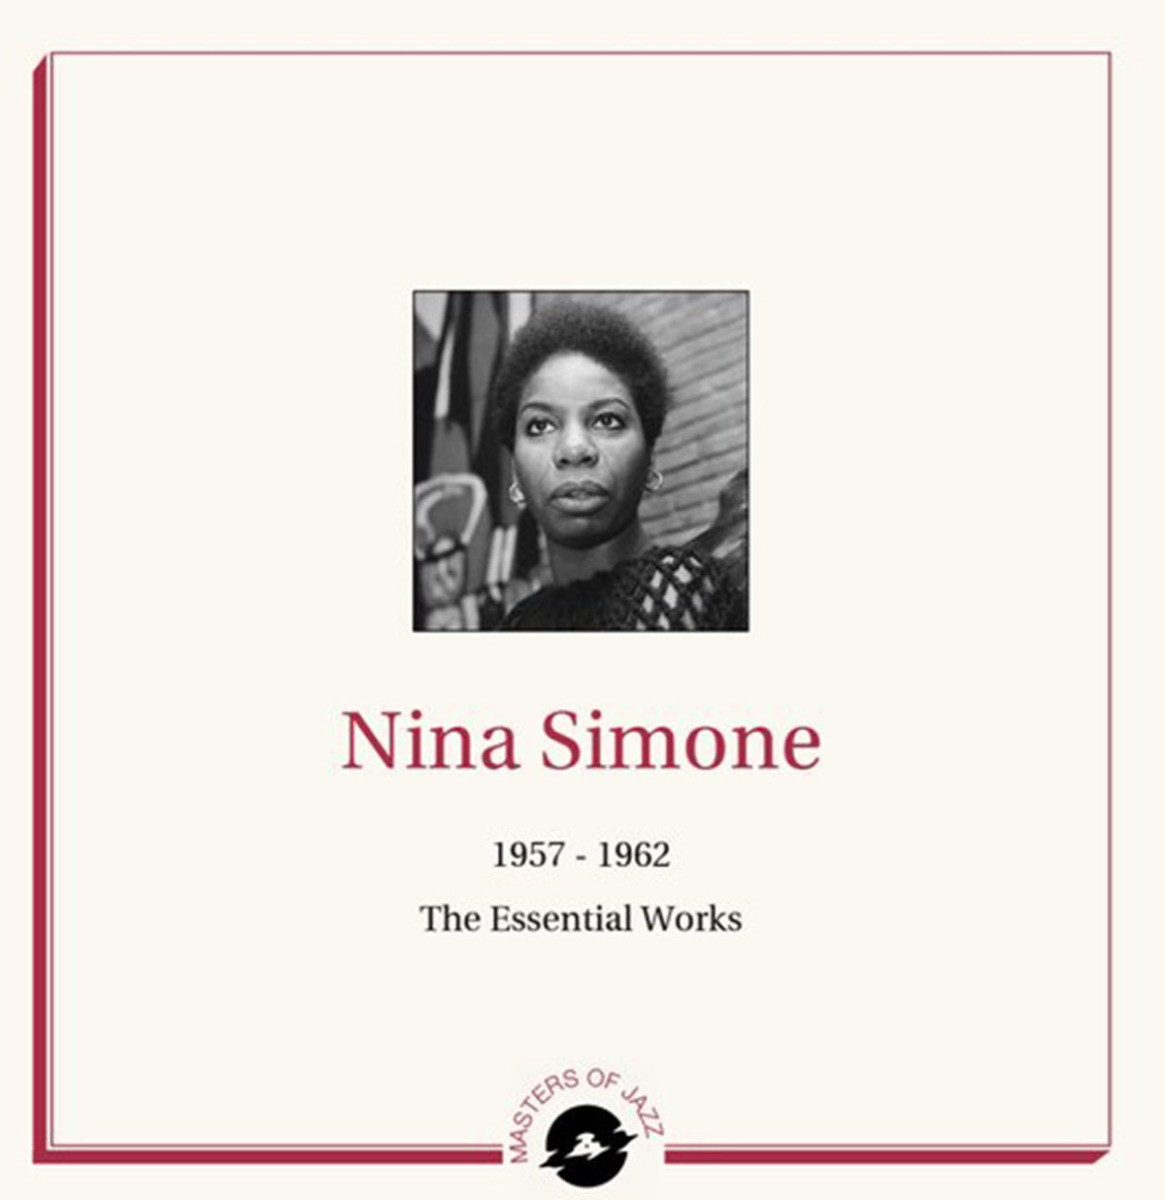 Nina Simone - The Essential Works 1957-1962 2LP